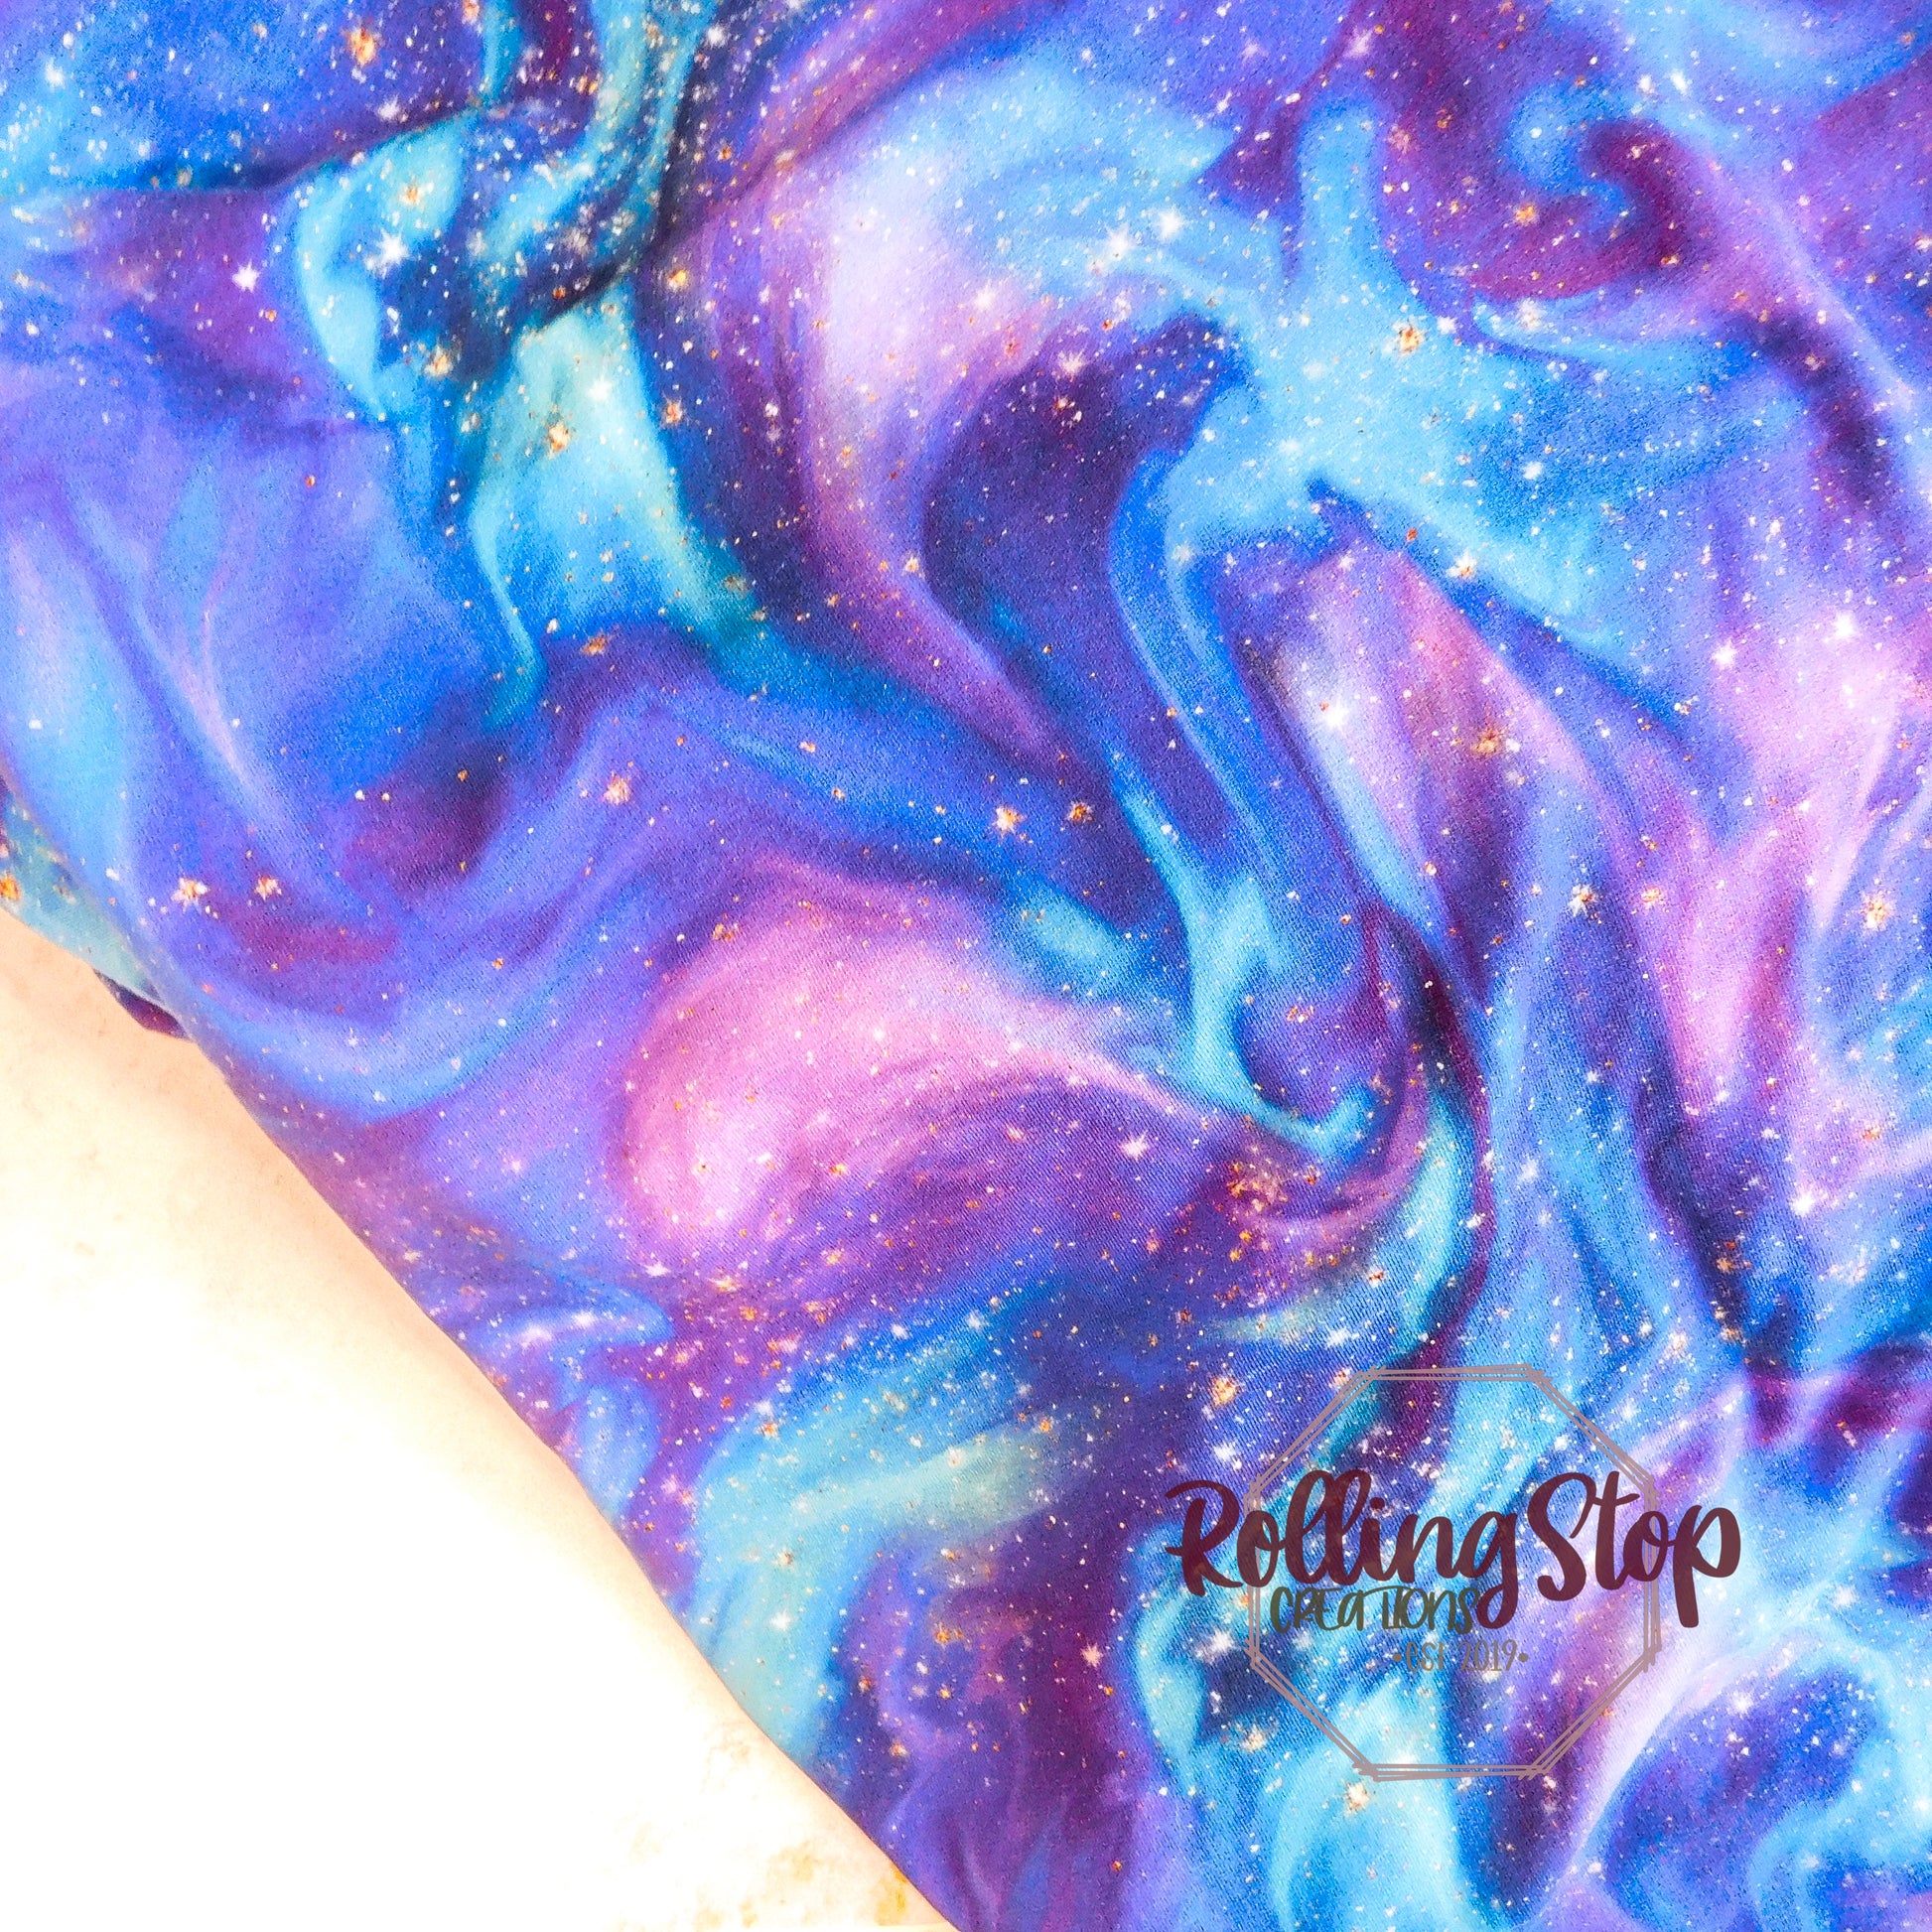 Elara Galaxy Lace Back Pantydrawls by Rolling Stop Creations sold by Rolling Stop Creations Lace - Lingerie - Panties